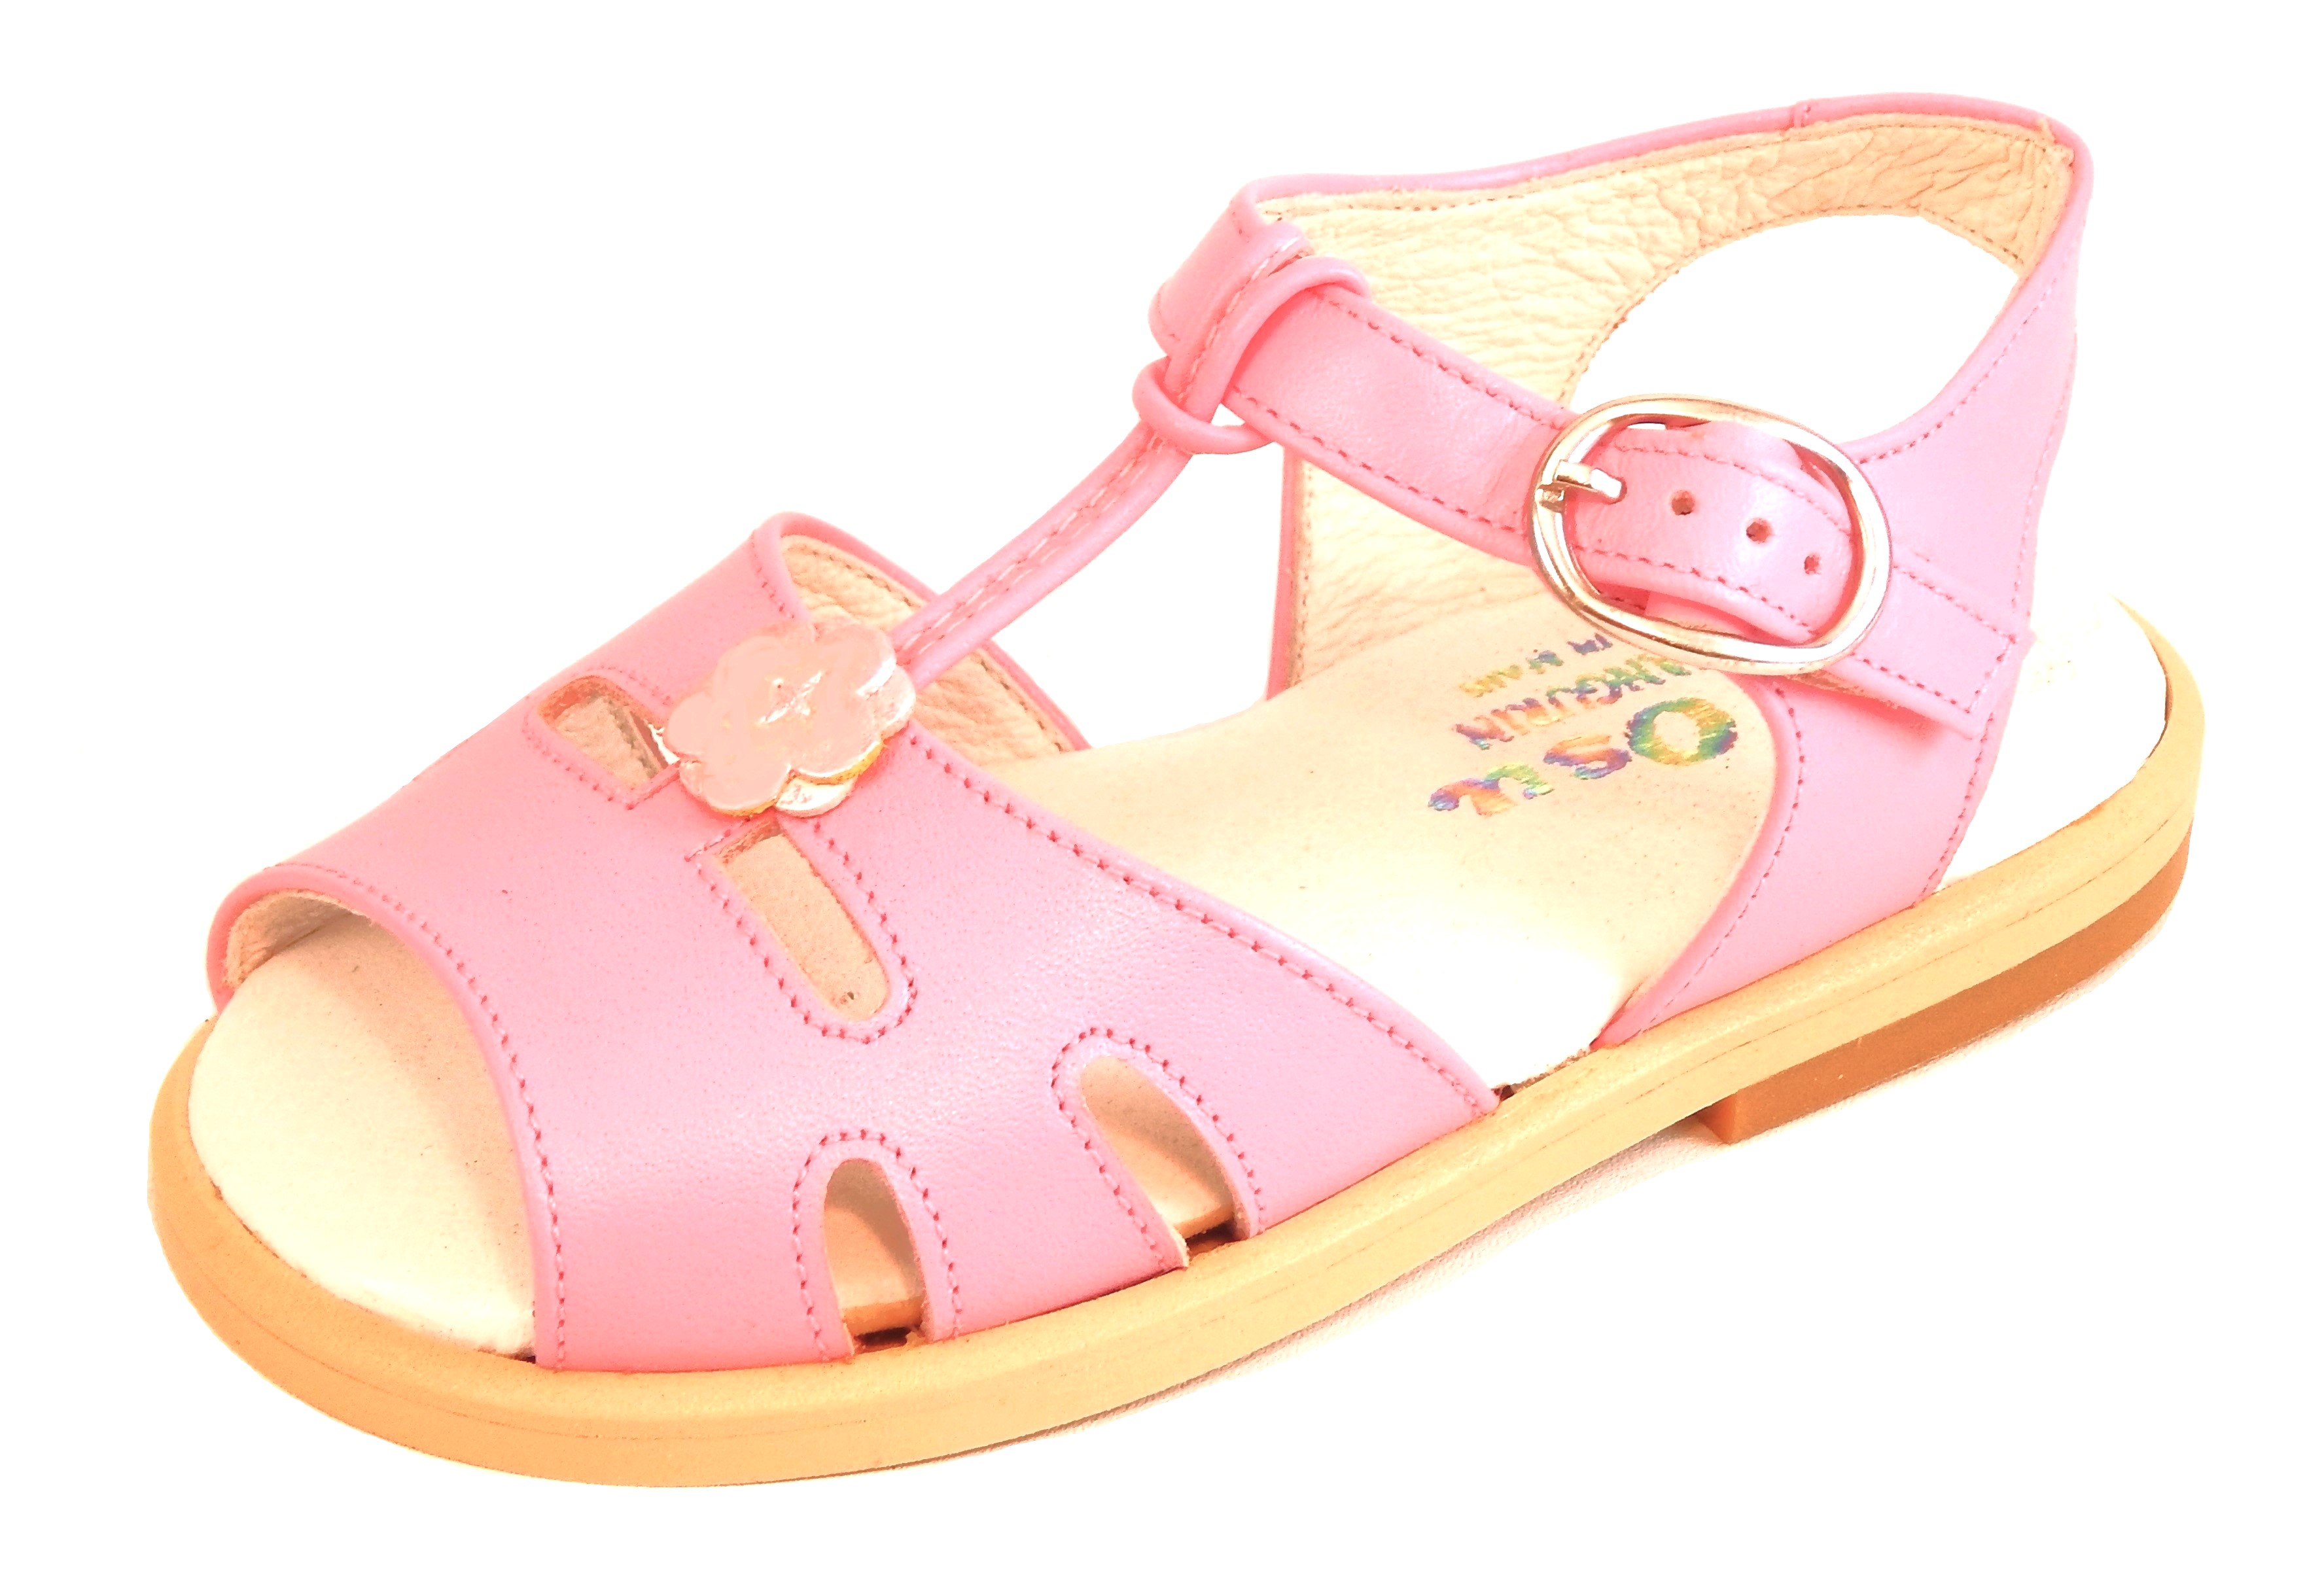 K-1058 - Pink Flower Sandals - Euro 24 Size 7